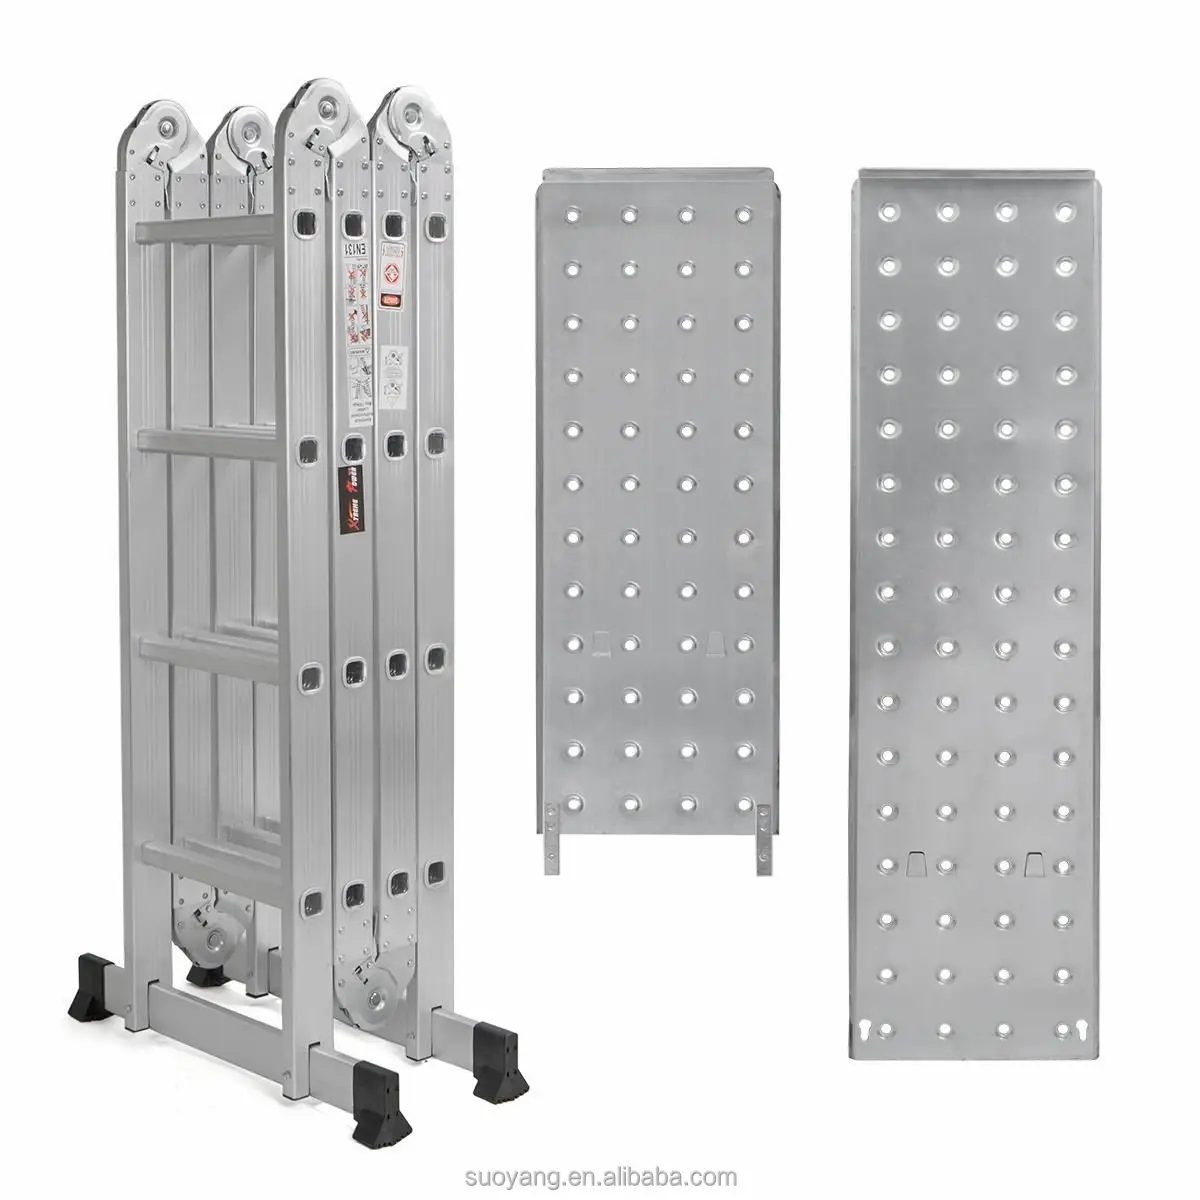 Escalera plegable de aluminio multifuncional para loft, cable de aluminio EN131